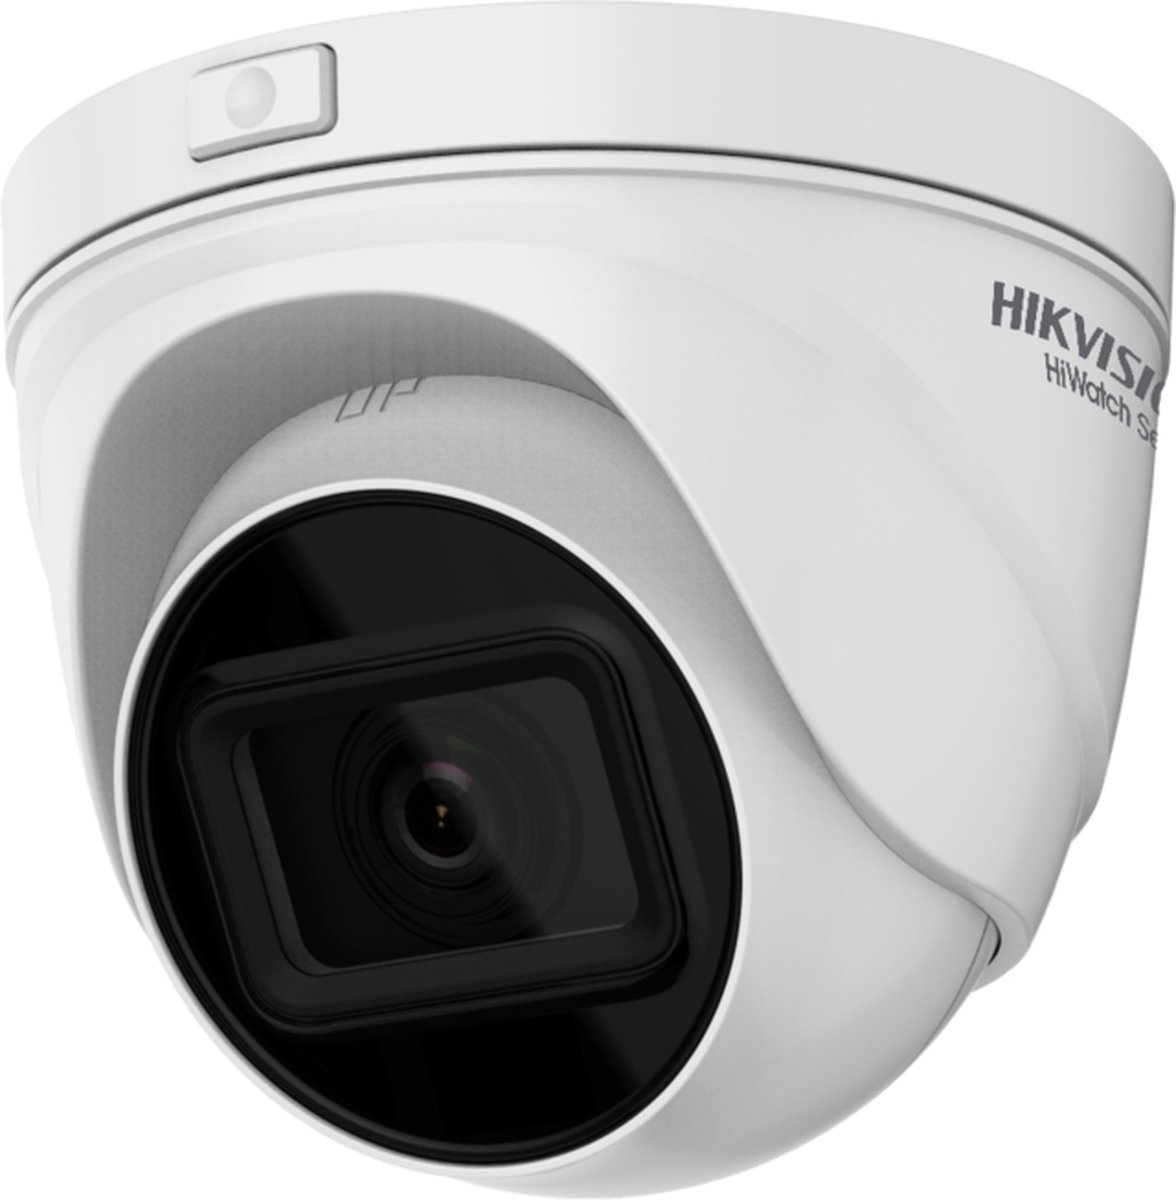 Hikvision HWI-T641H-Z HiWatch Full HD 4MP buiten eyeball met varifocale lens, IR nachtzicht, 120dB WDR, PoE